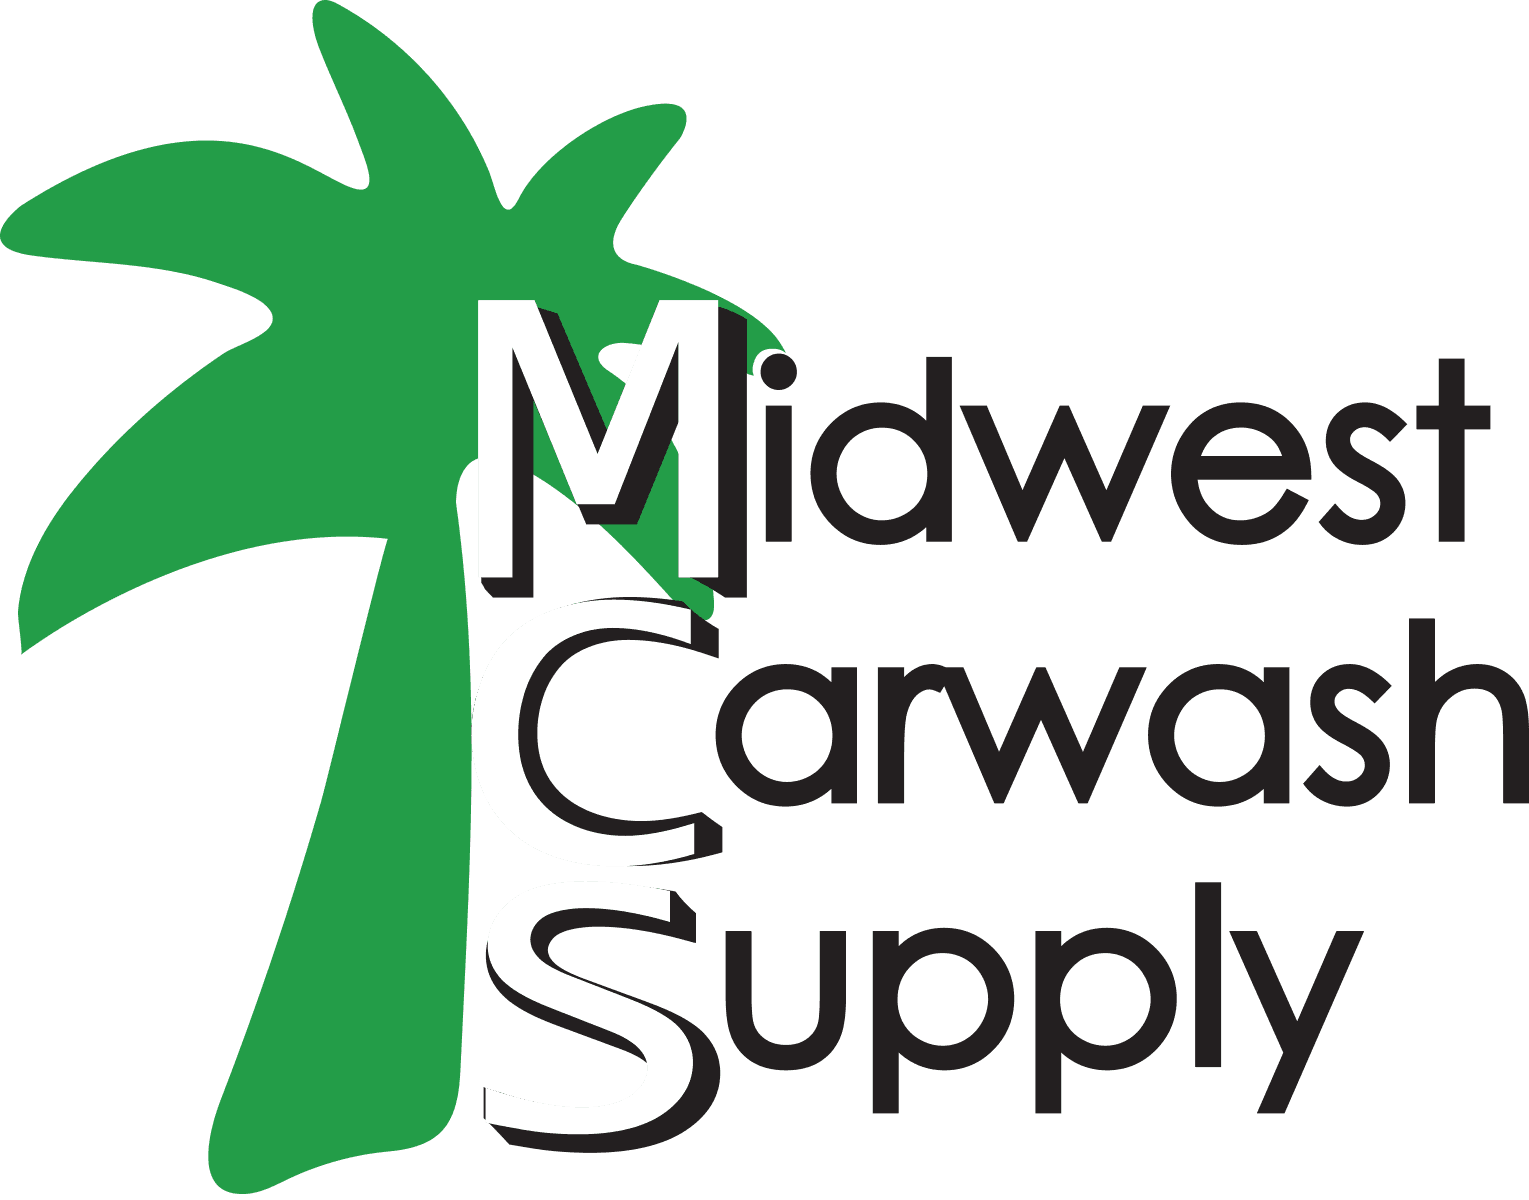 Midwest carwash supply palm tree logo